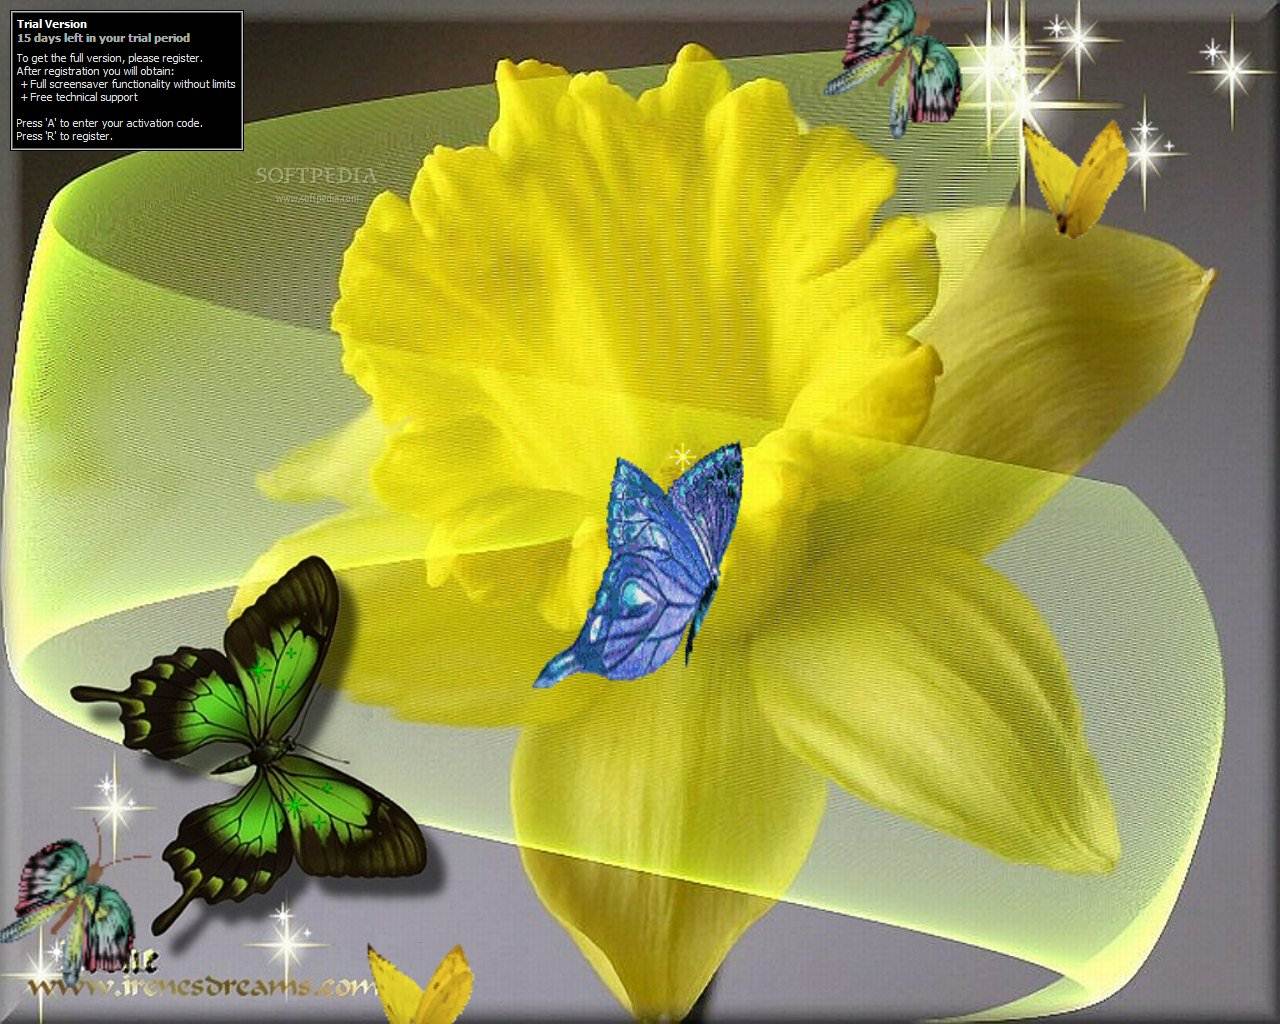 Butterfly Images For Desktop